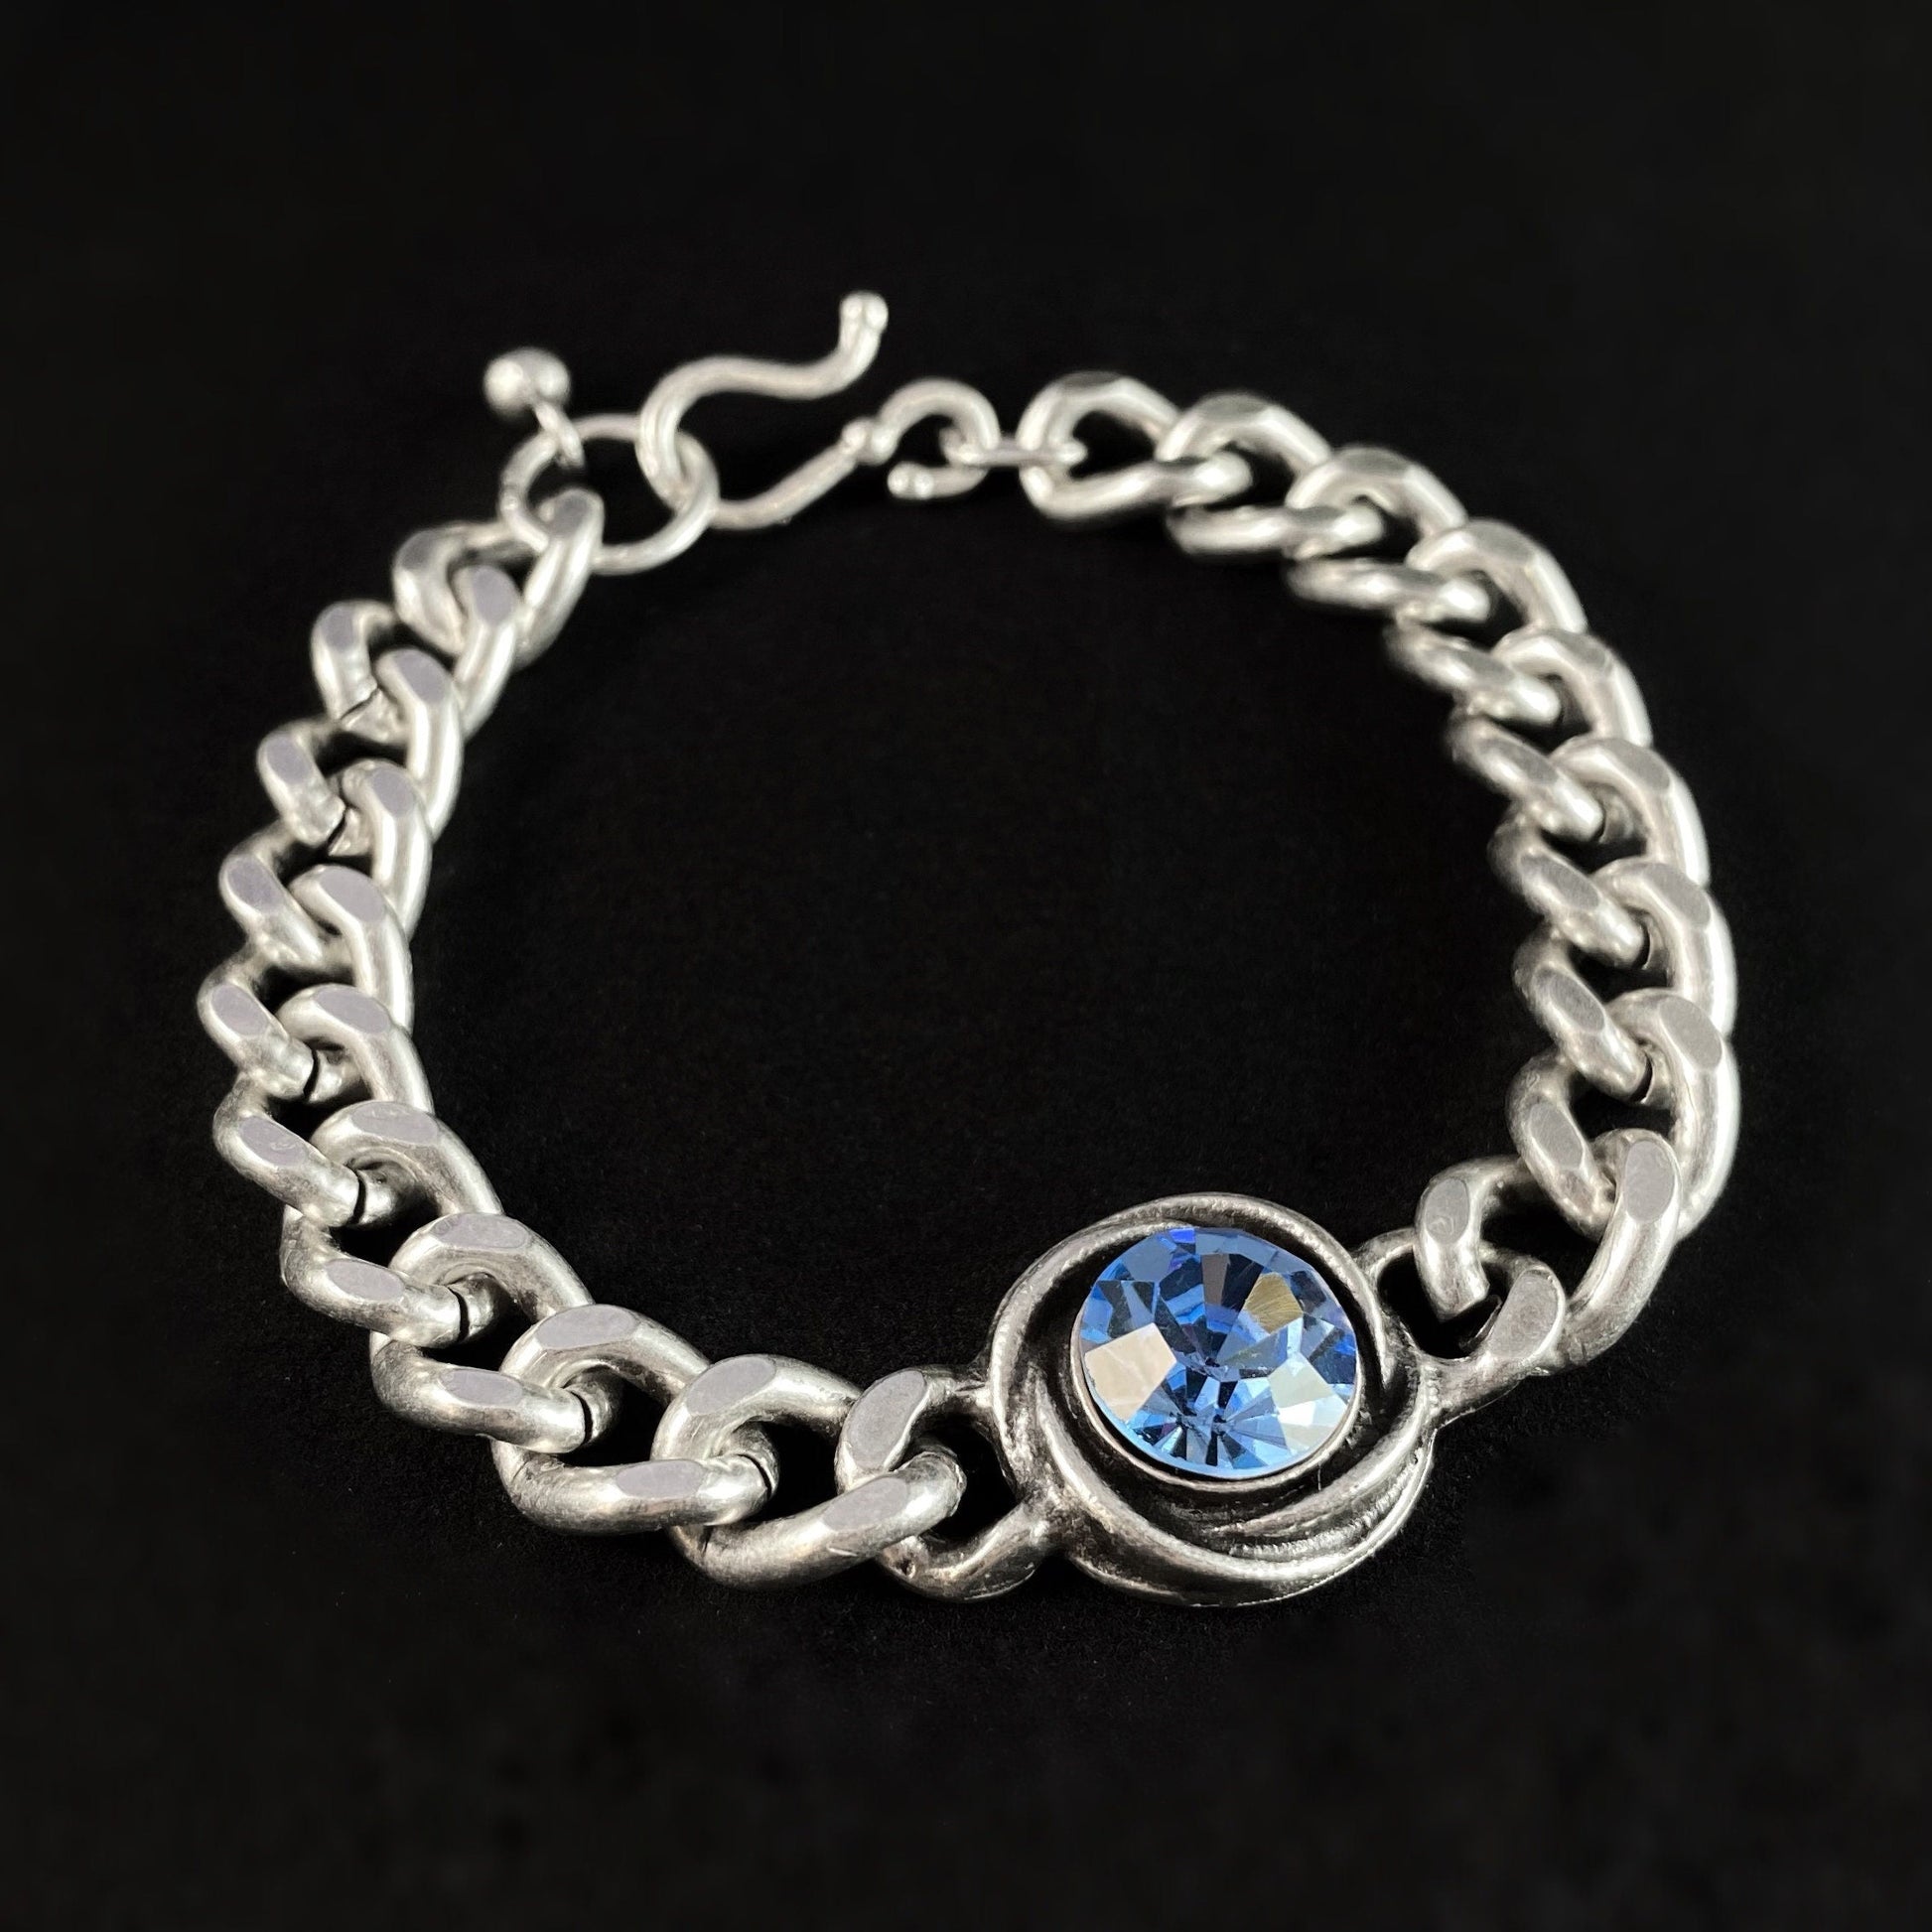 Silver Link Bracelet with Blue Crystal, Handmade, Nickel Free